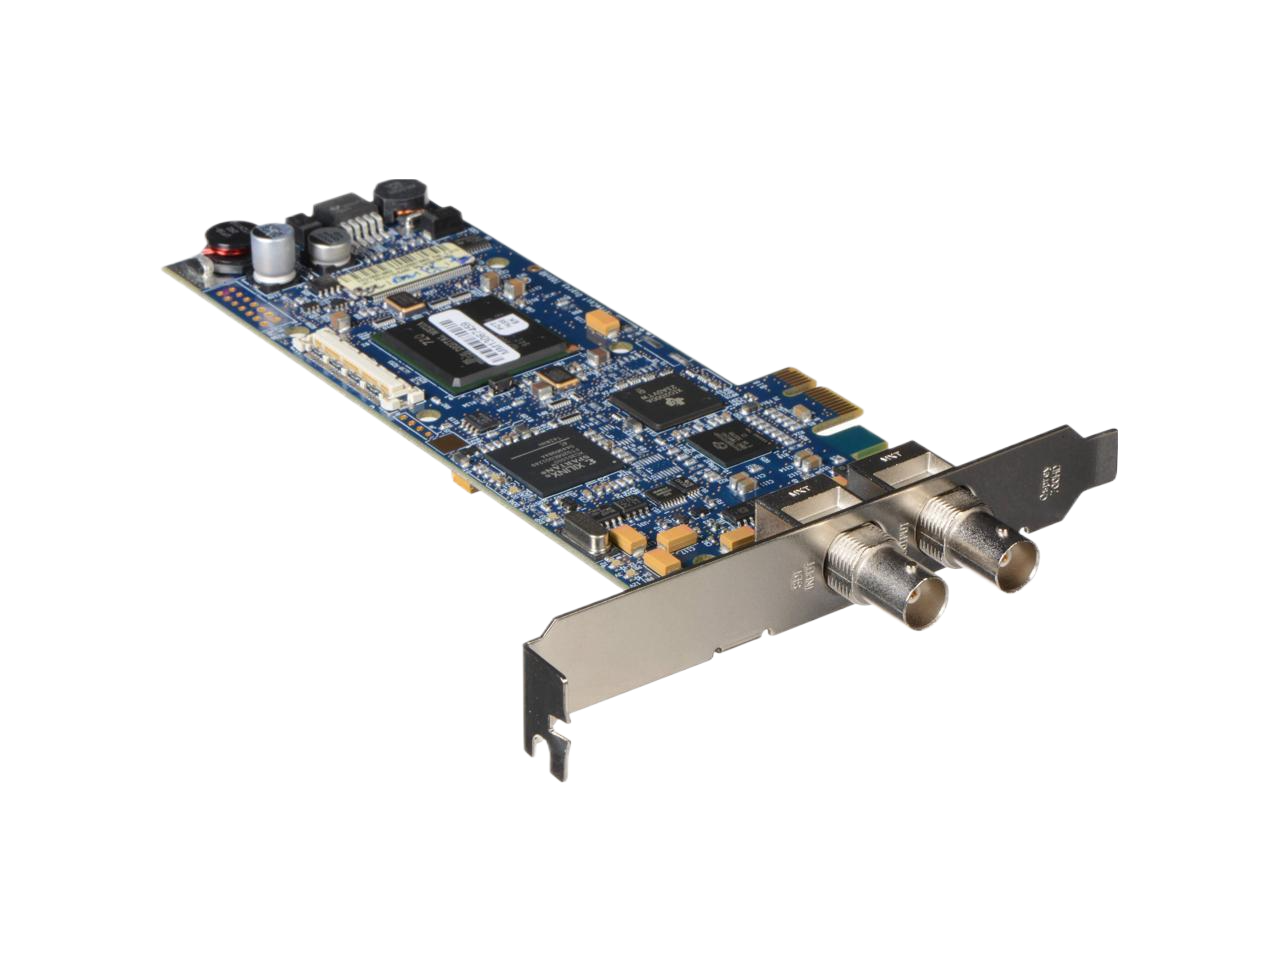 Osprey 700e HD PCIe Video Capture Card